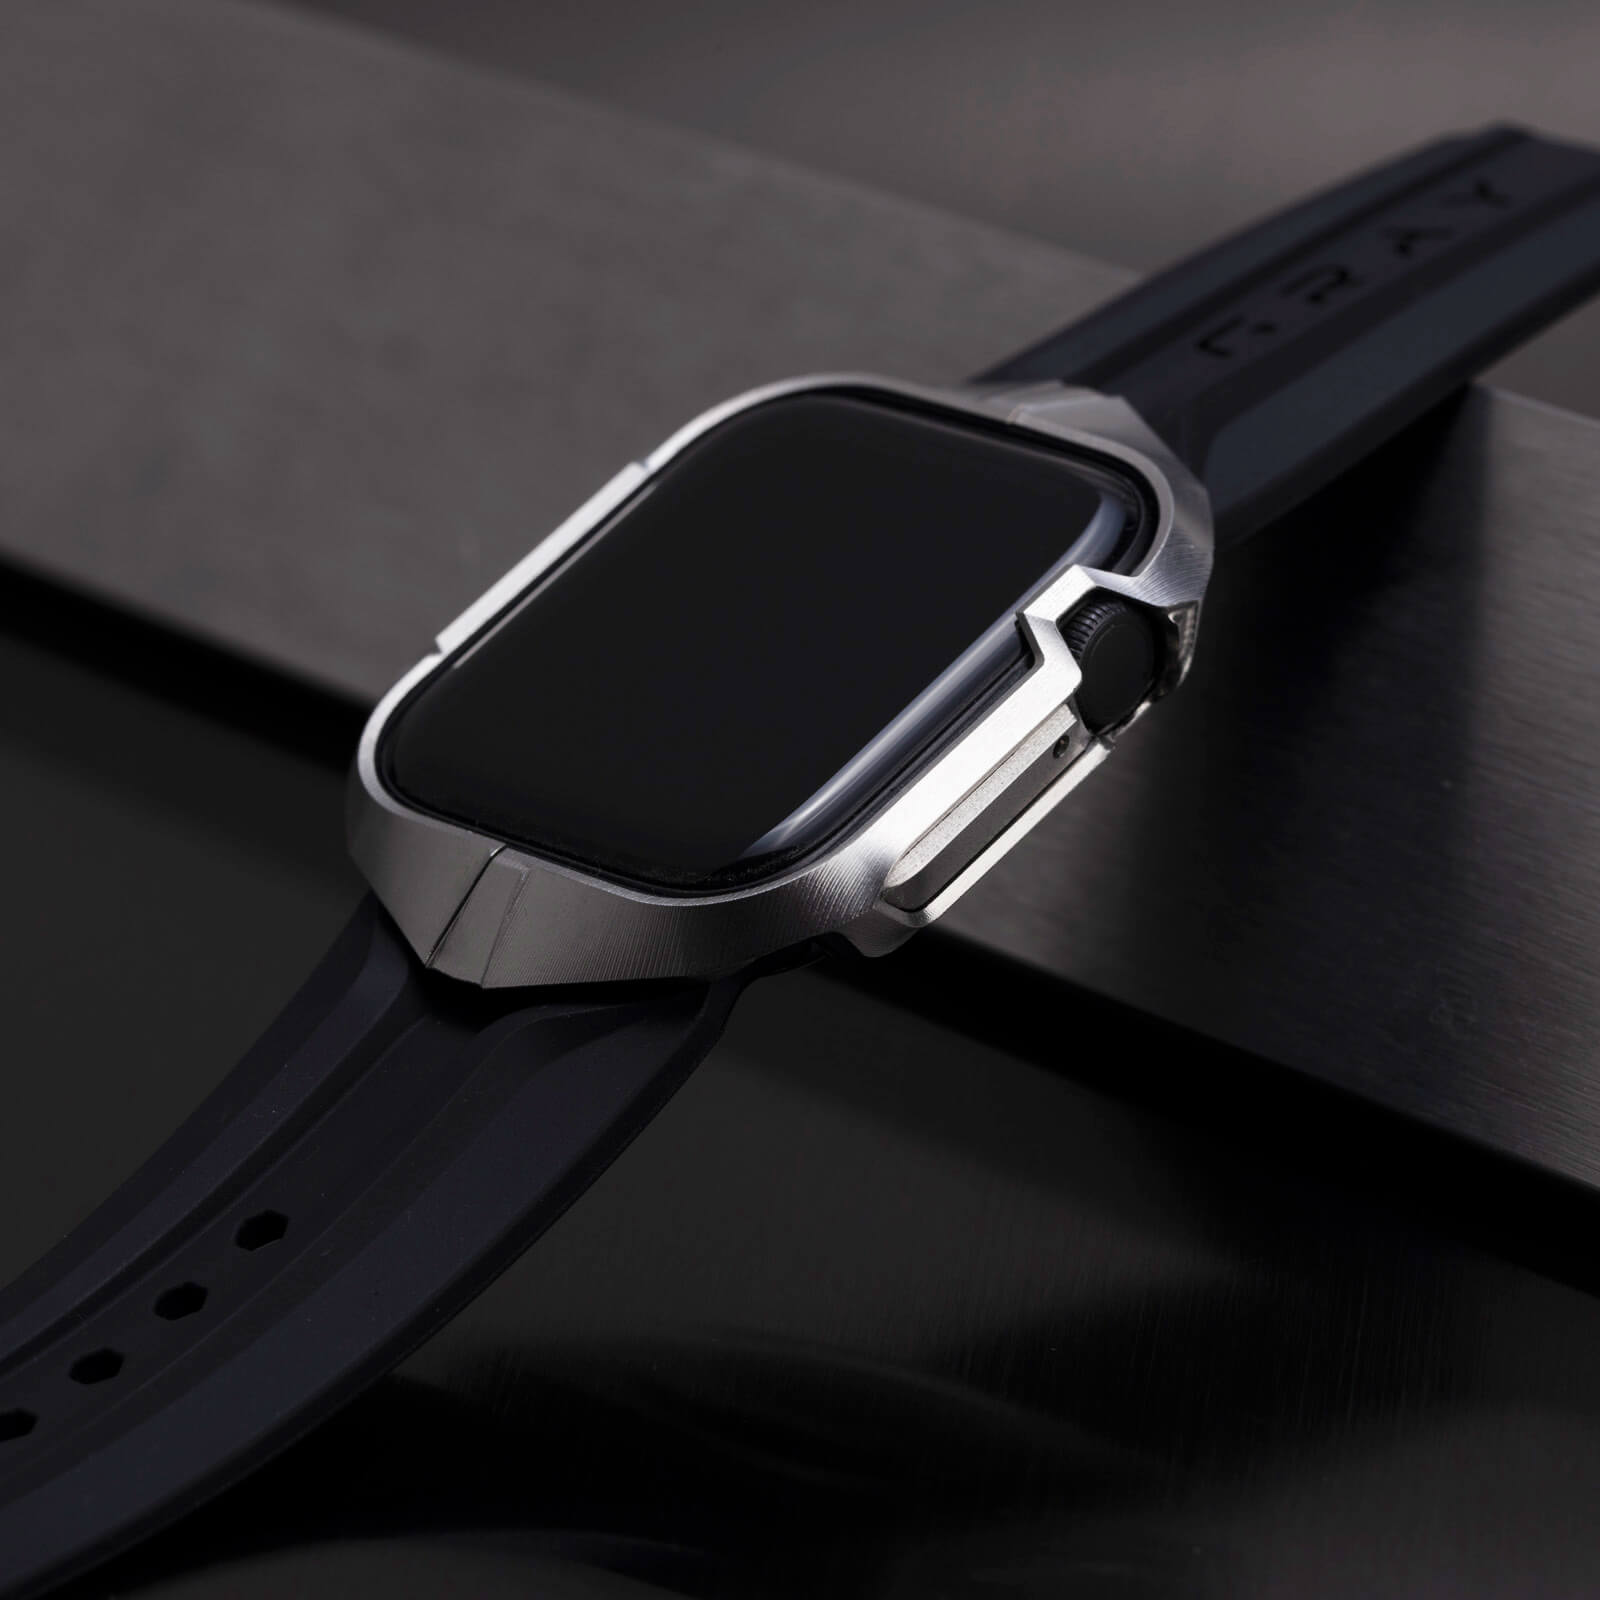 Titanium Apple Watch Case | CYBER WATCH® - GRAY®